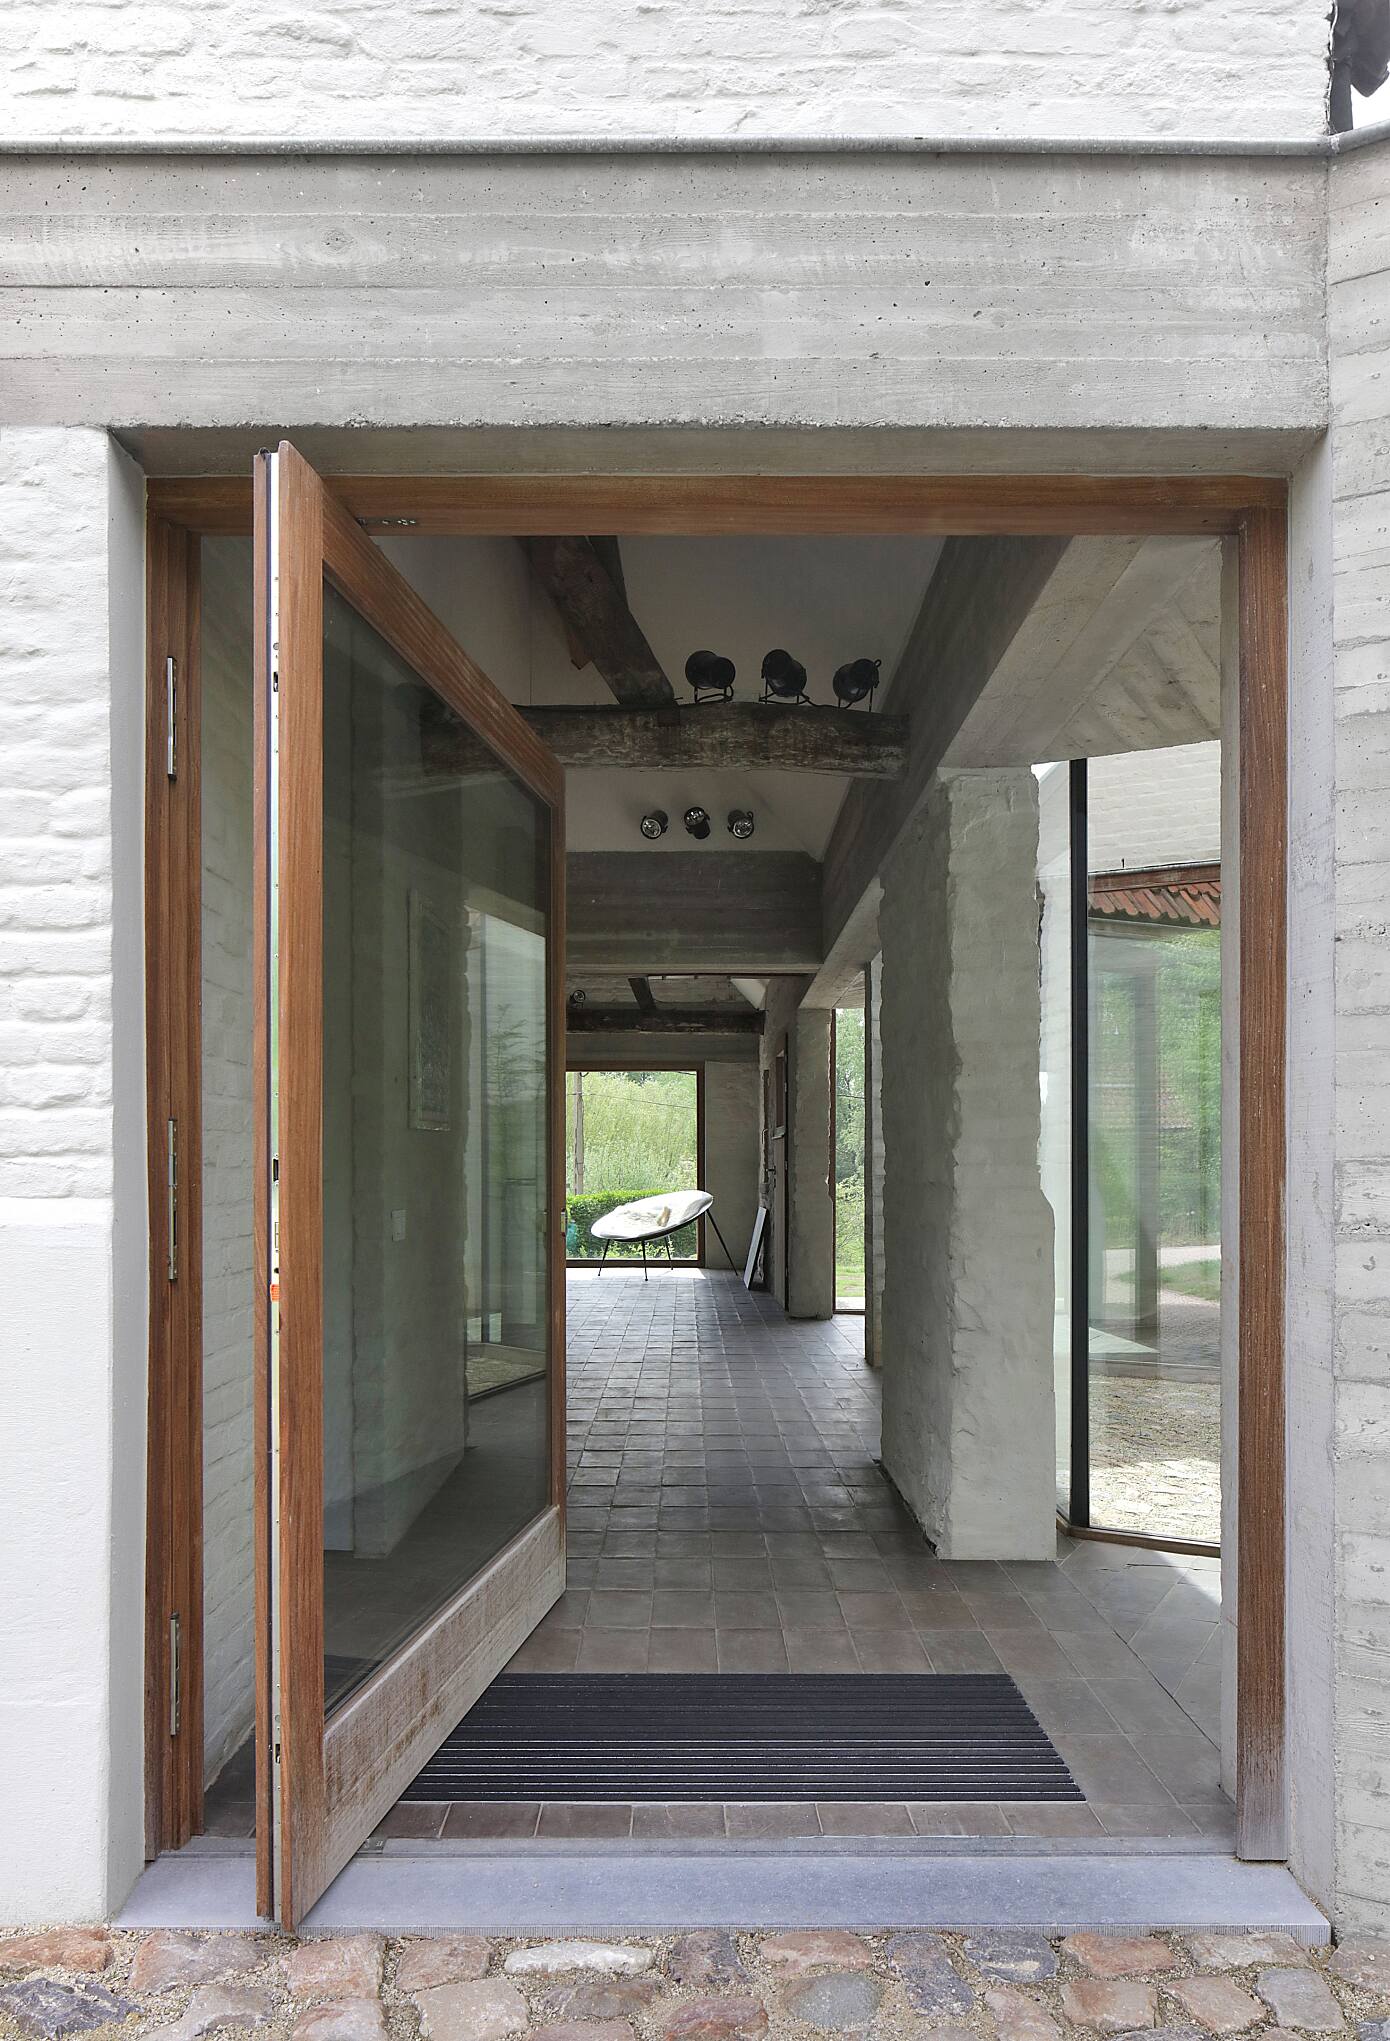 House BS by Graux & Baeyens Architecten